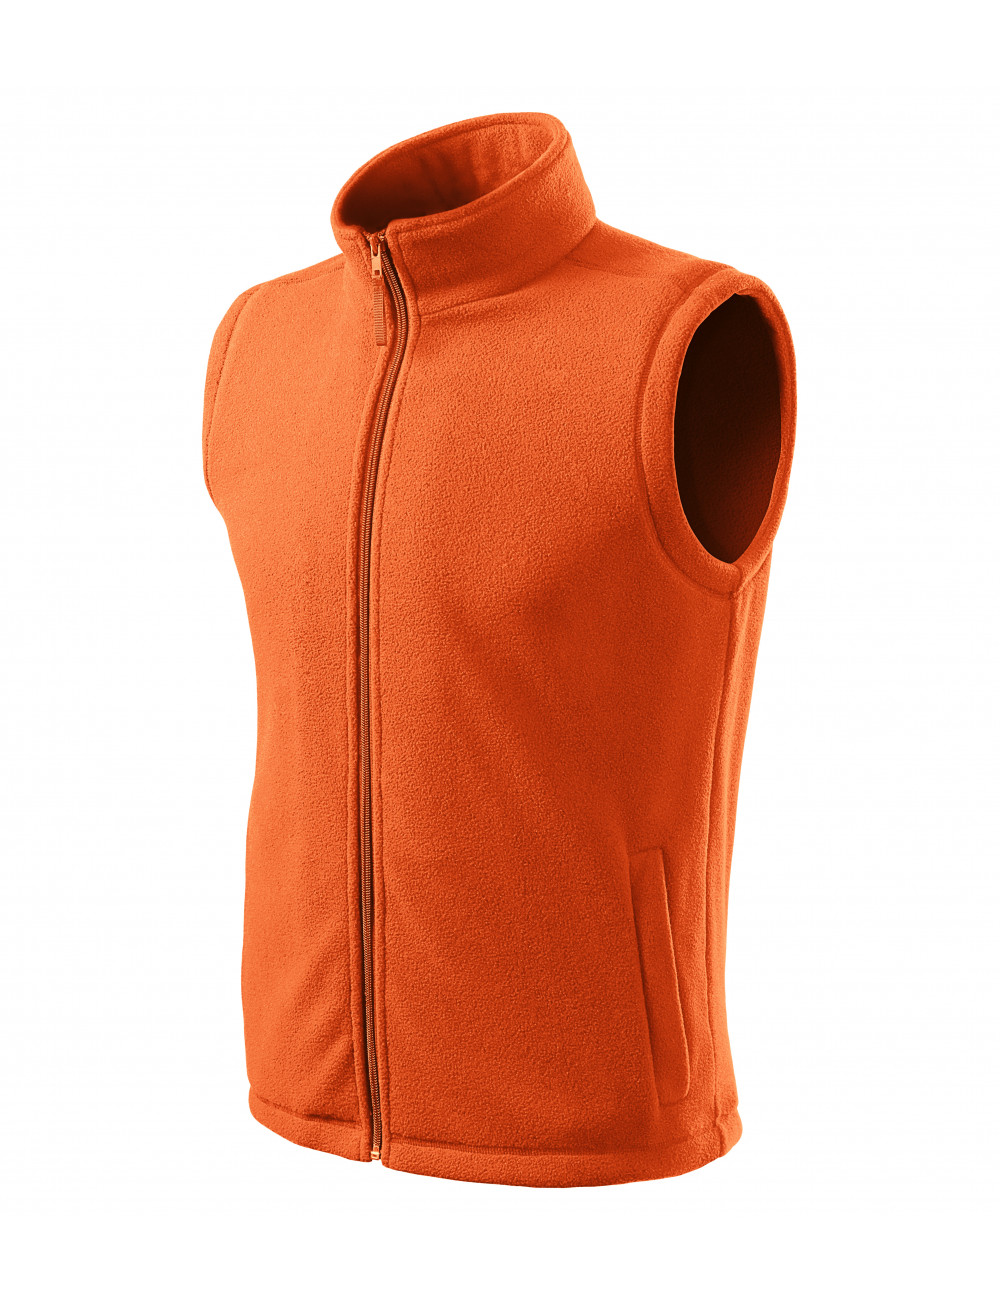 Unisex fleece vest next 518 orange Adler Rimeck